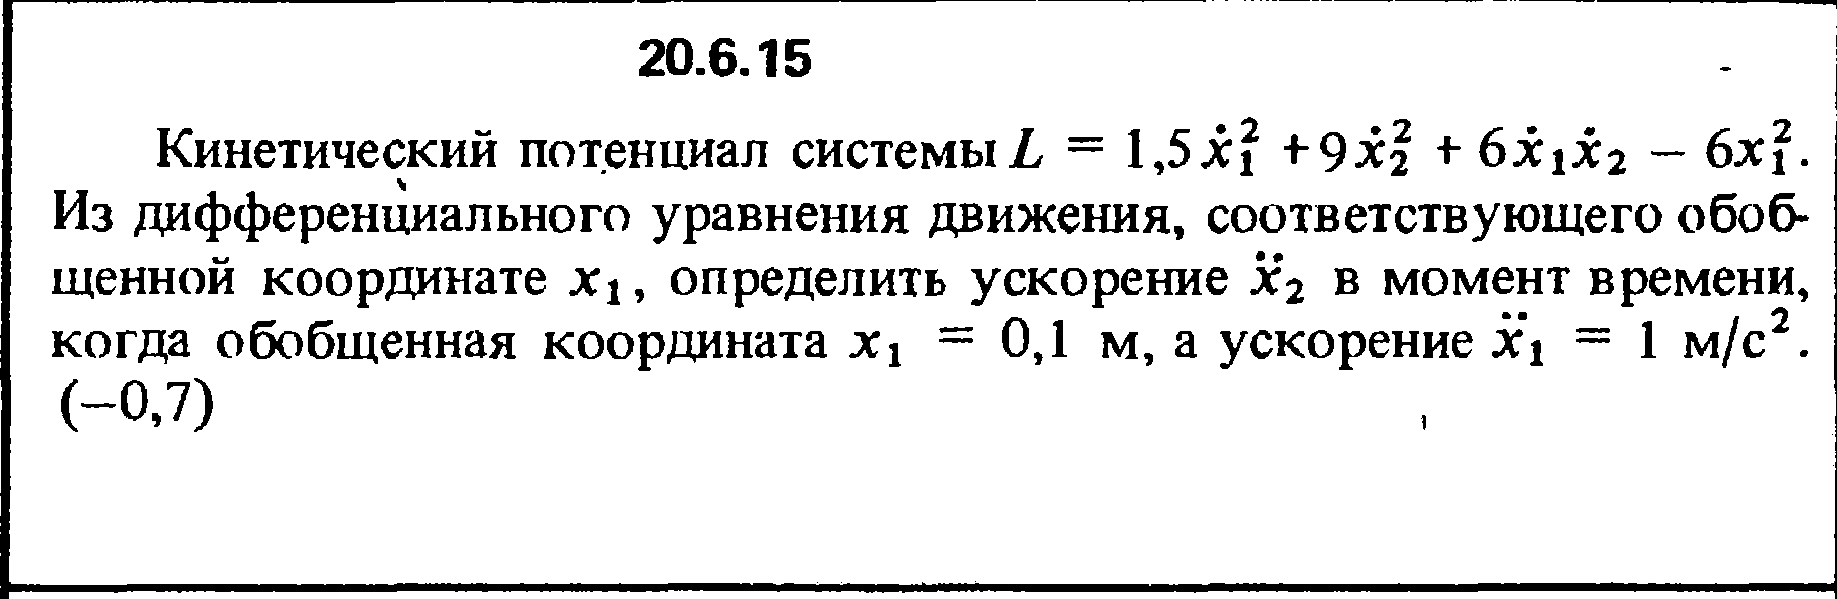 Решение 20.6.15 из сборника (решебника) Кепе О.Е. 1989